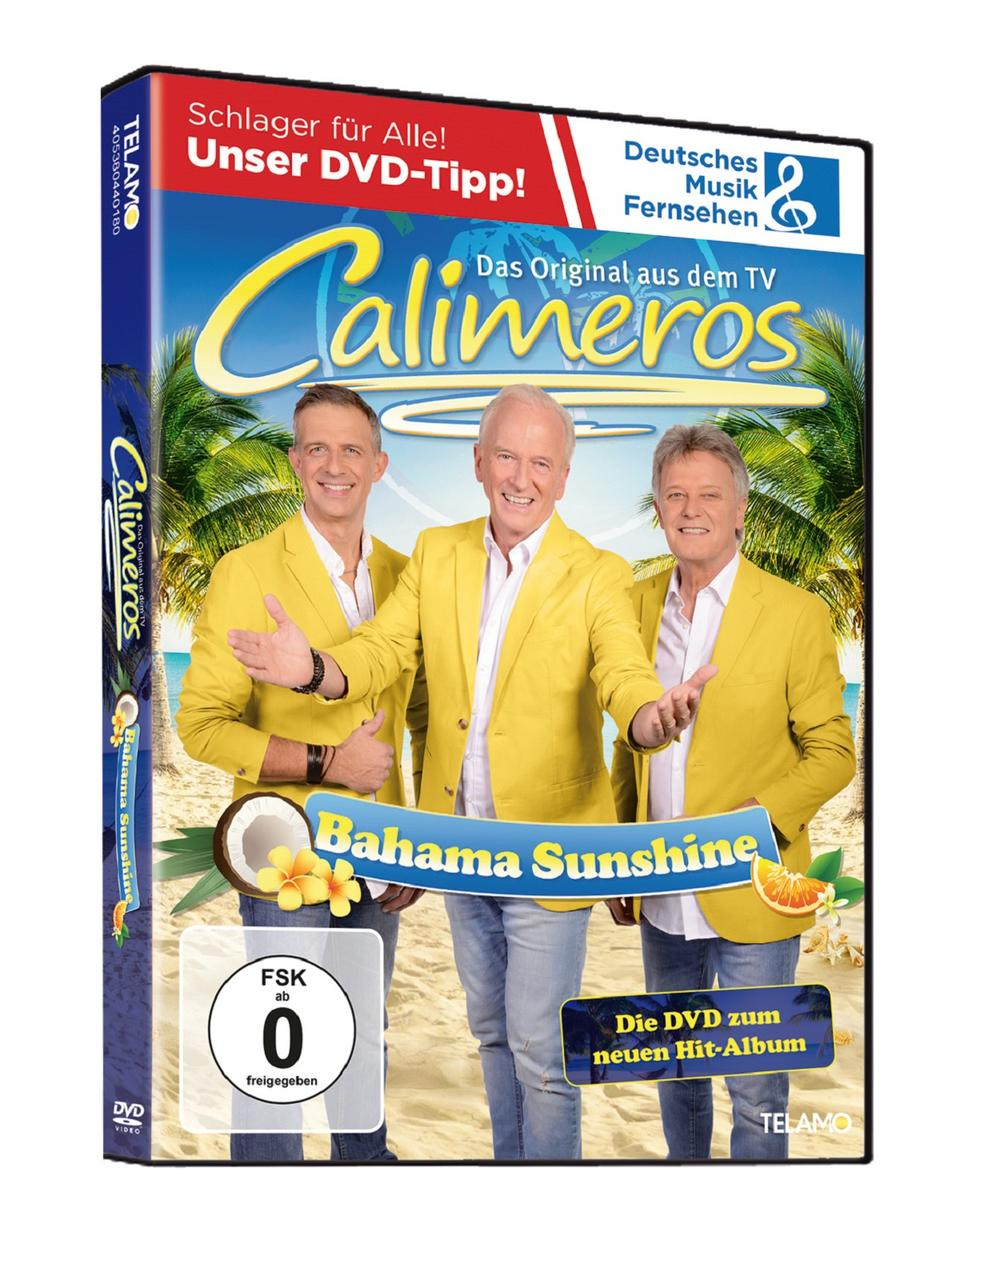 Calimeros - - Bahama Sunshine (DVD)